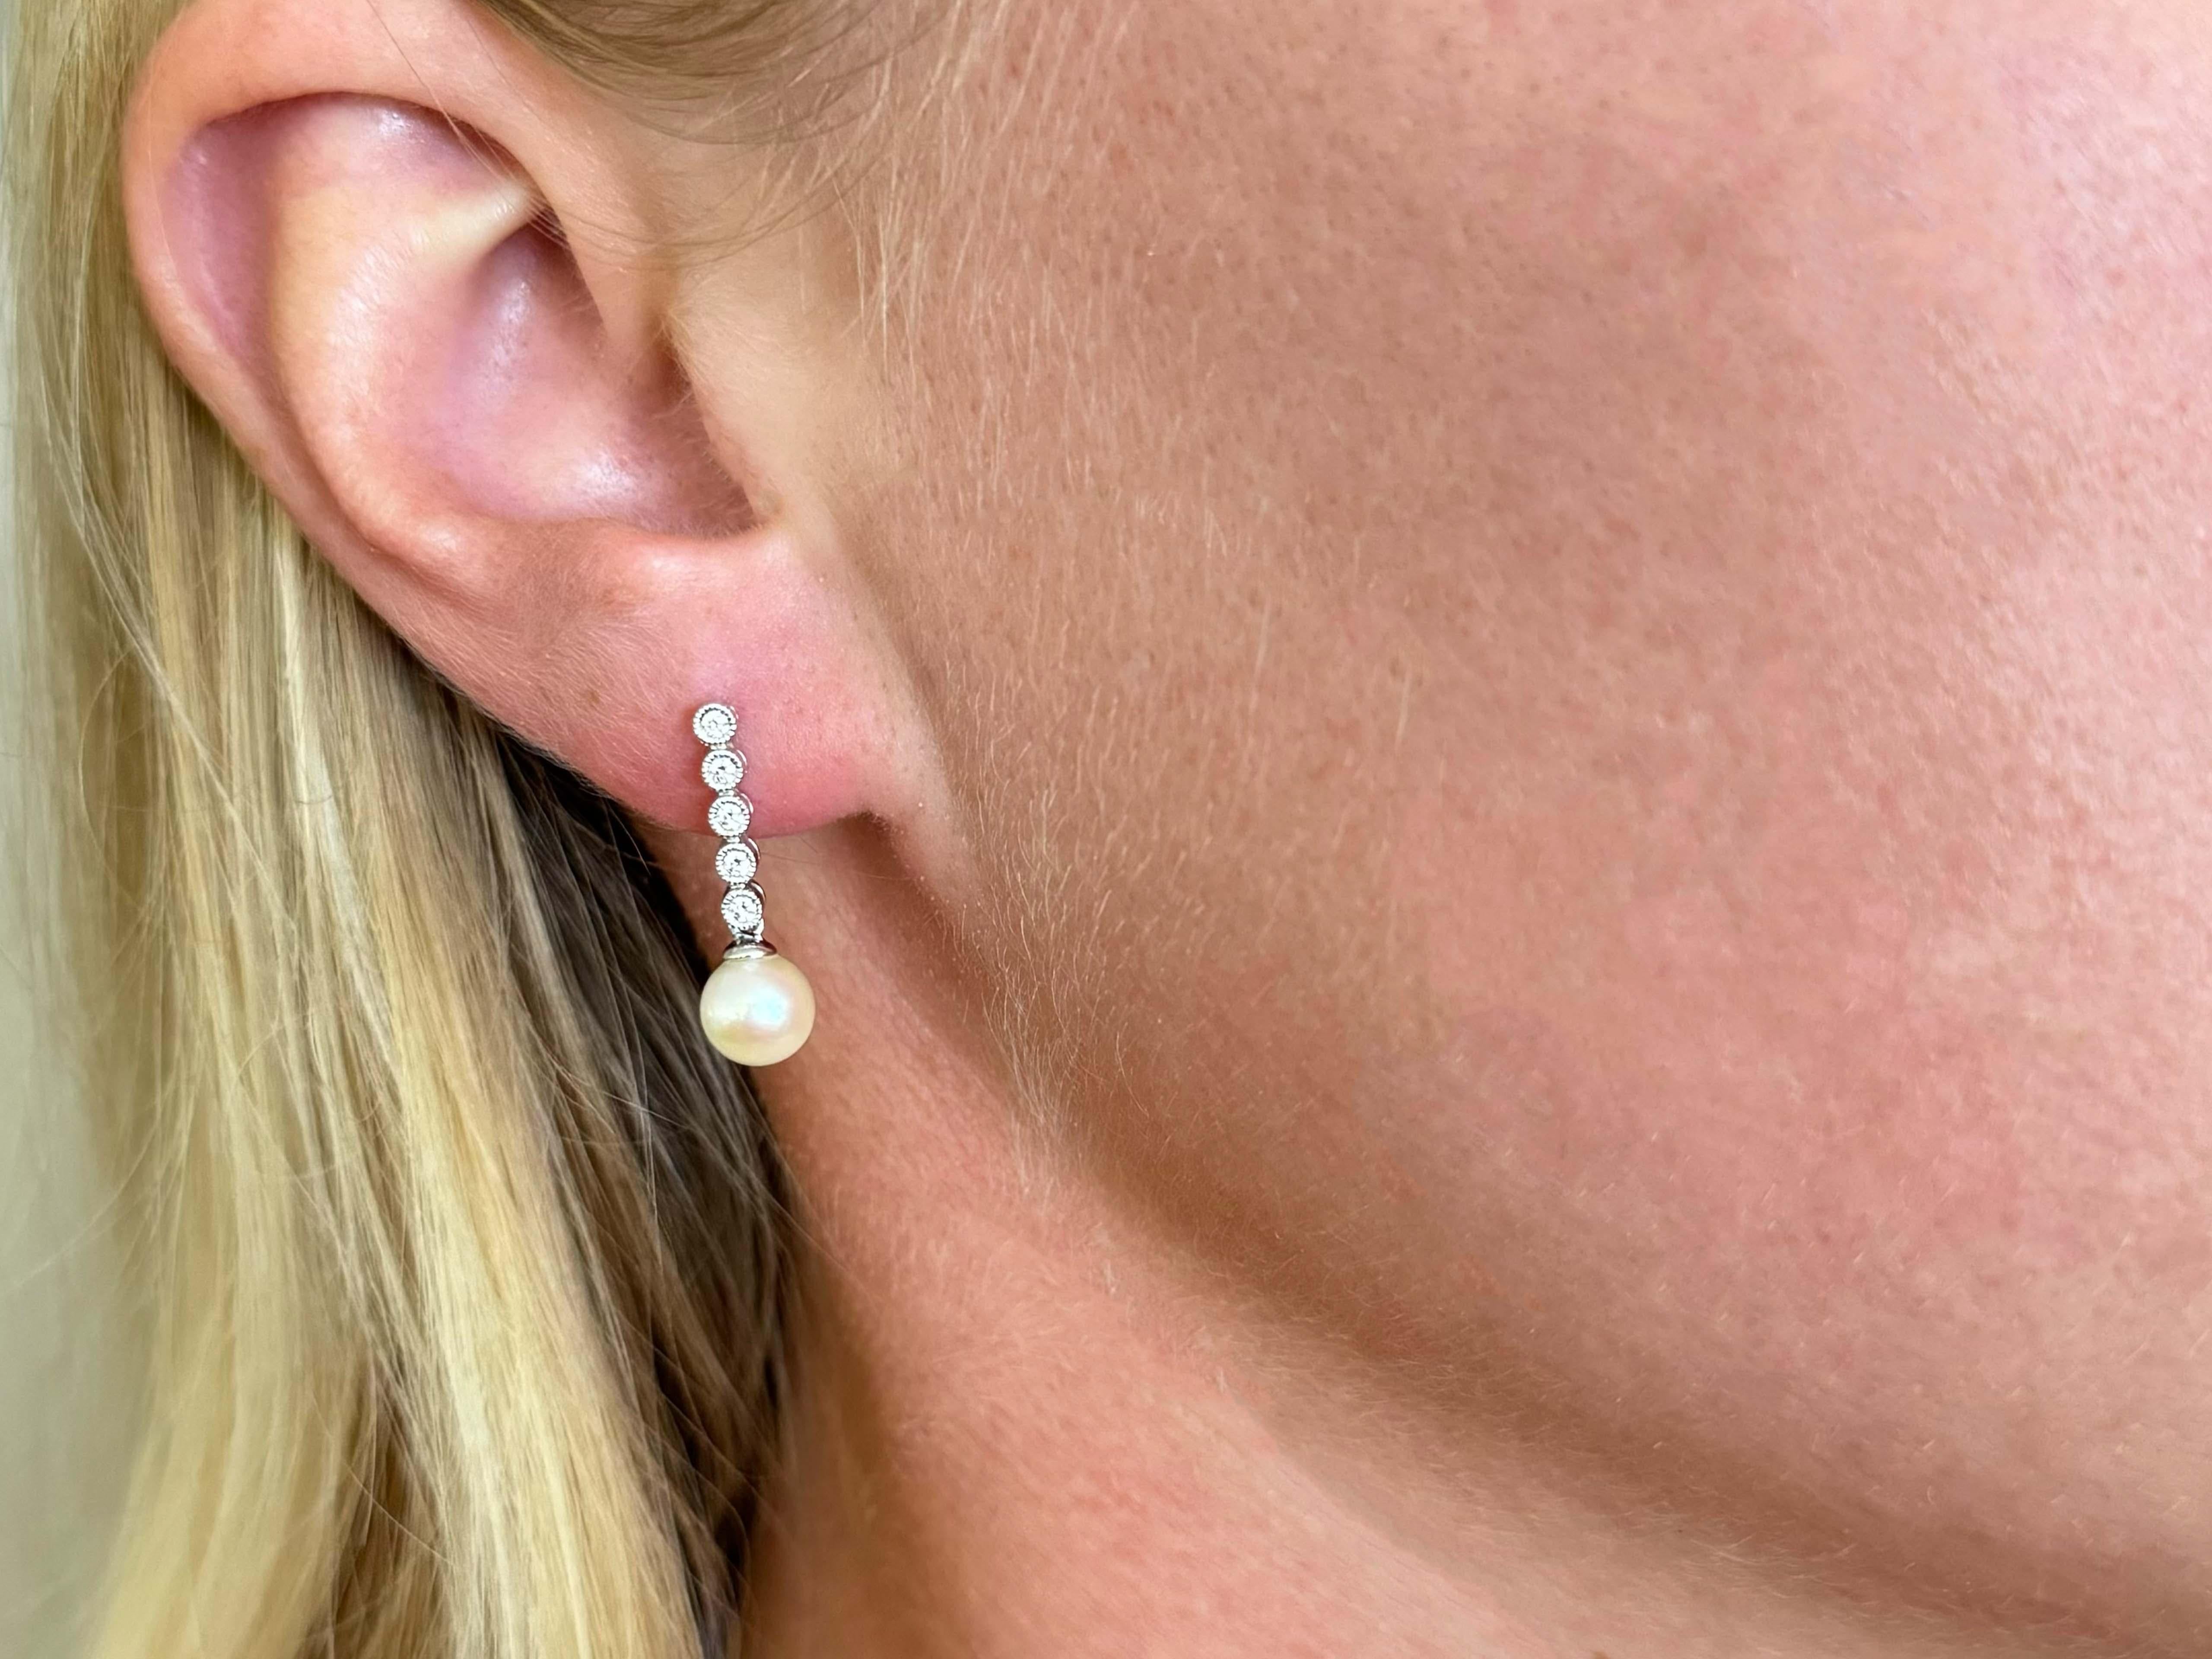 Earrings Specifications:

Metal: 14k White Gold

Earring Length: 0.80